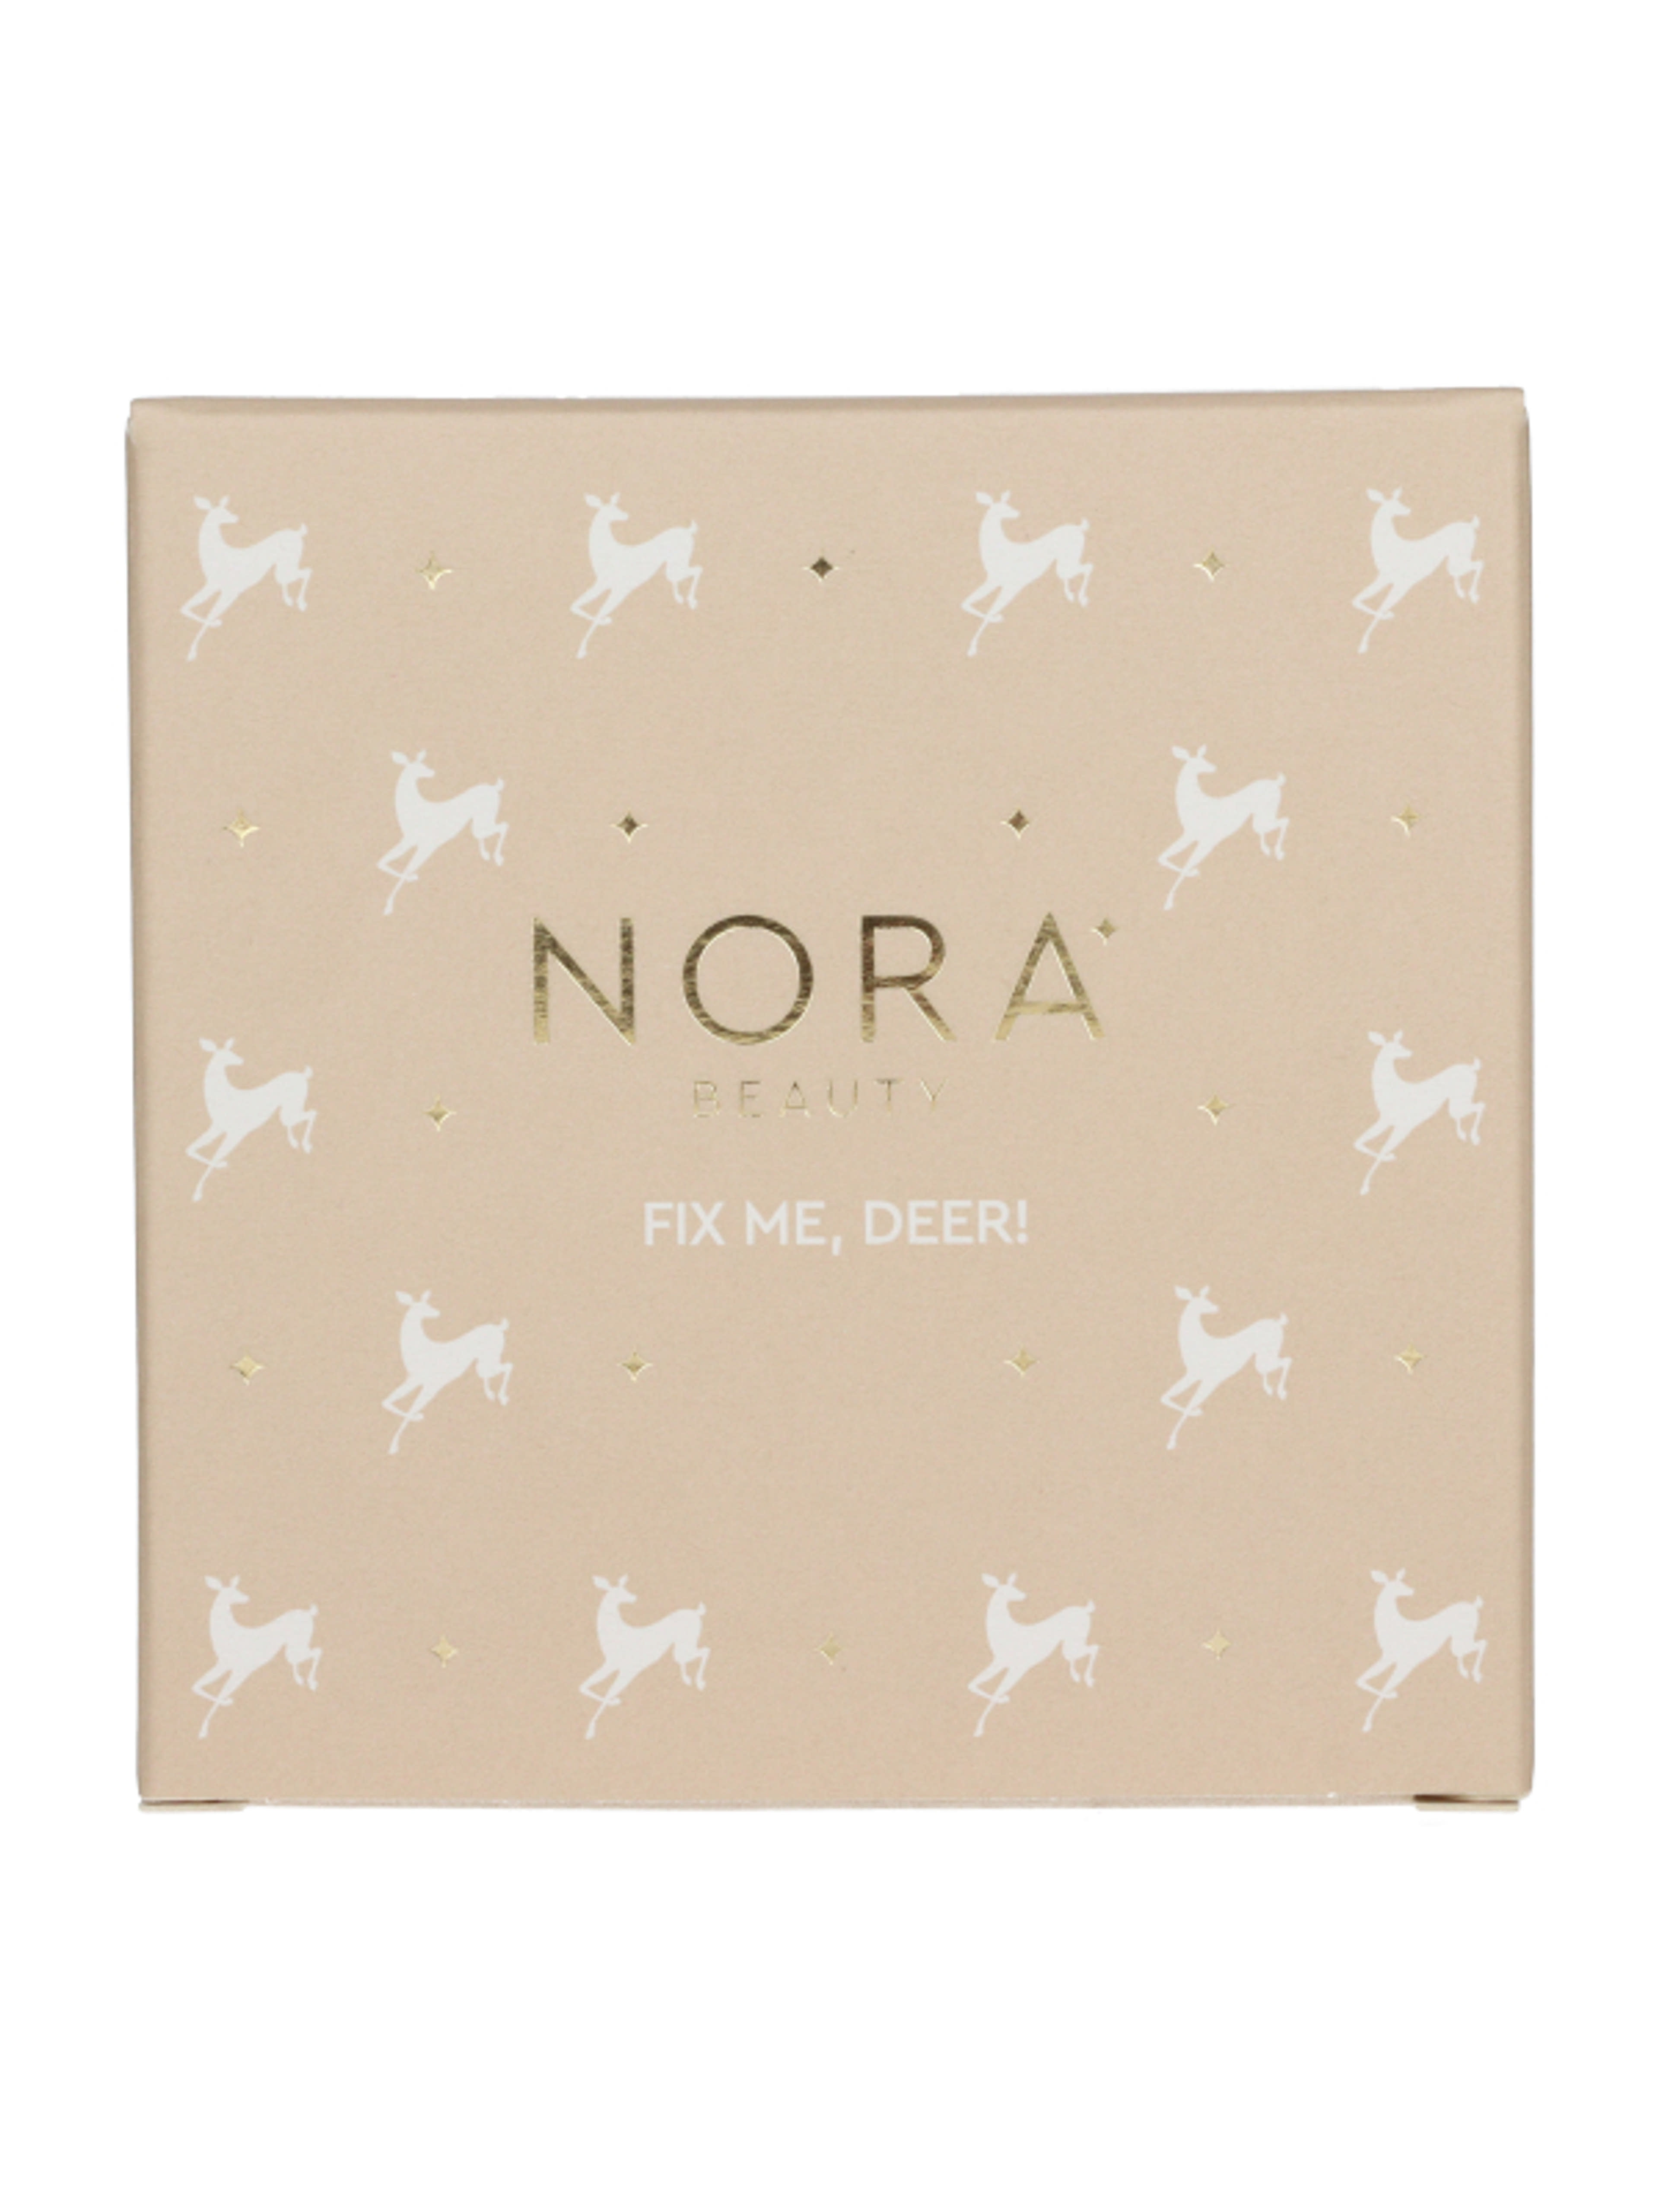 Nora Beauty kompakt púder/02 natural - 1 db